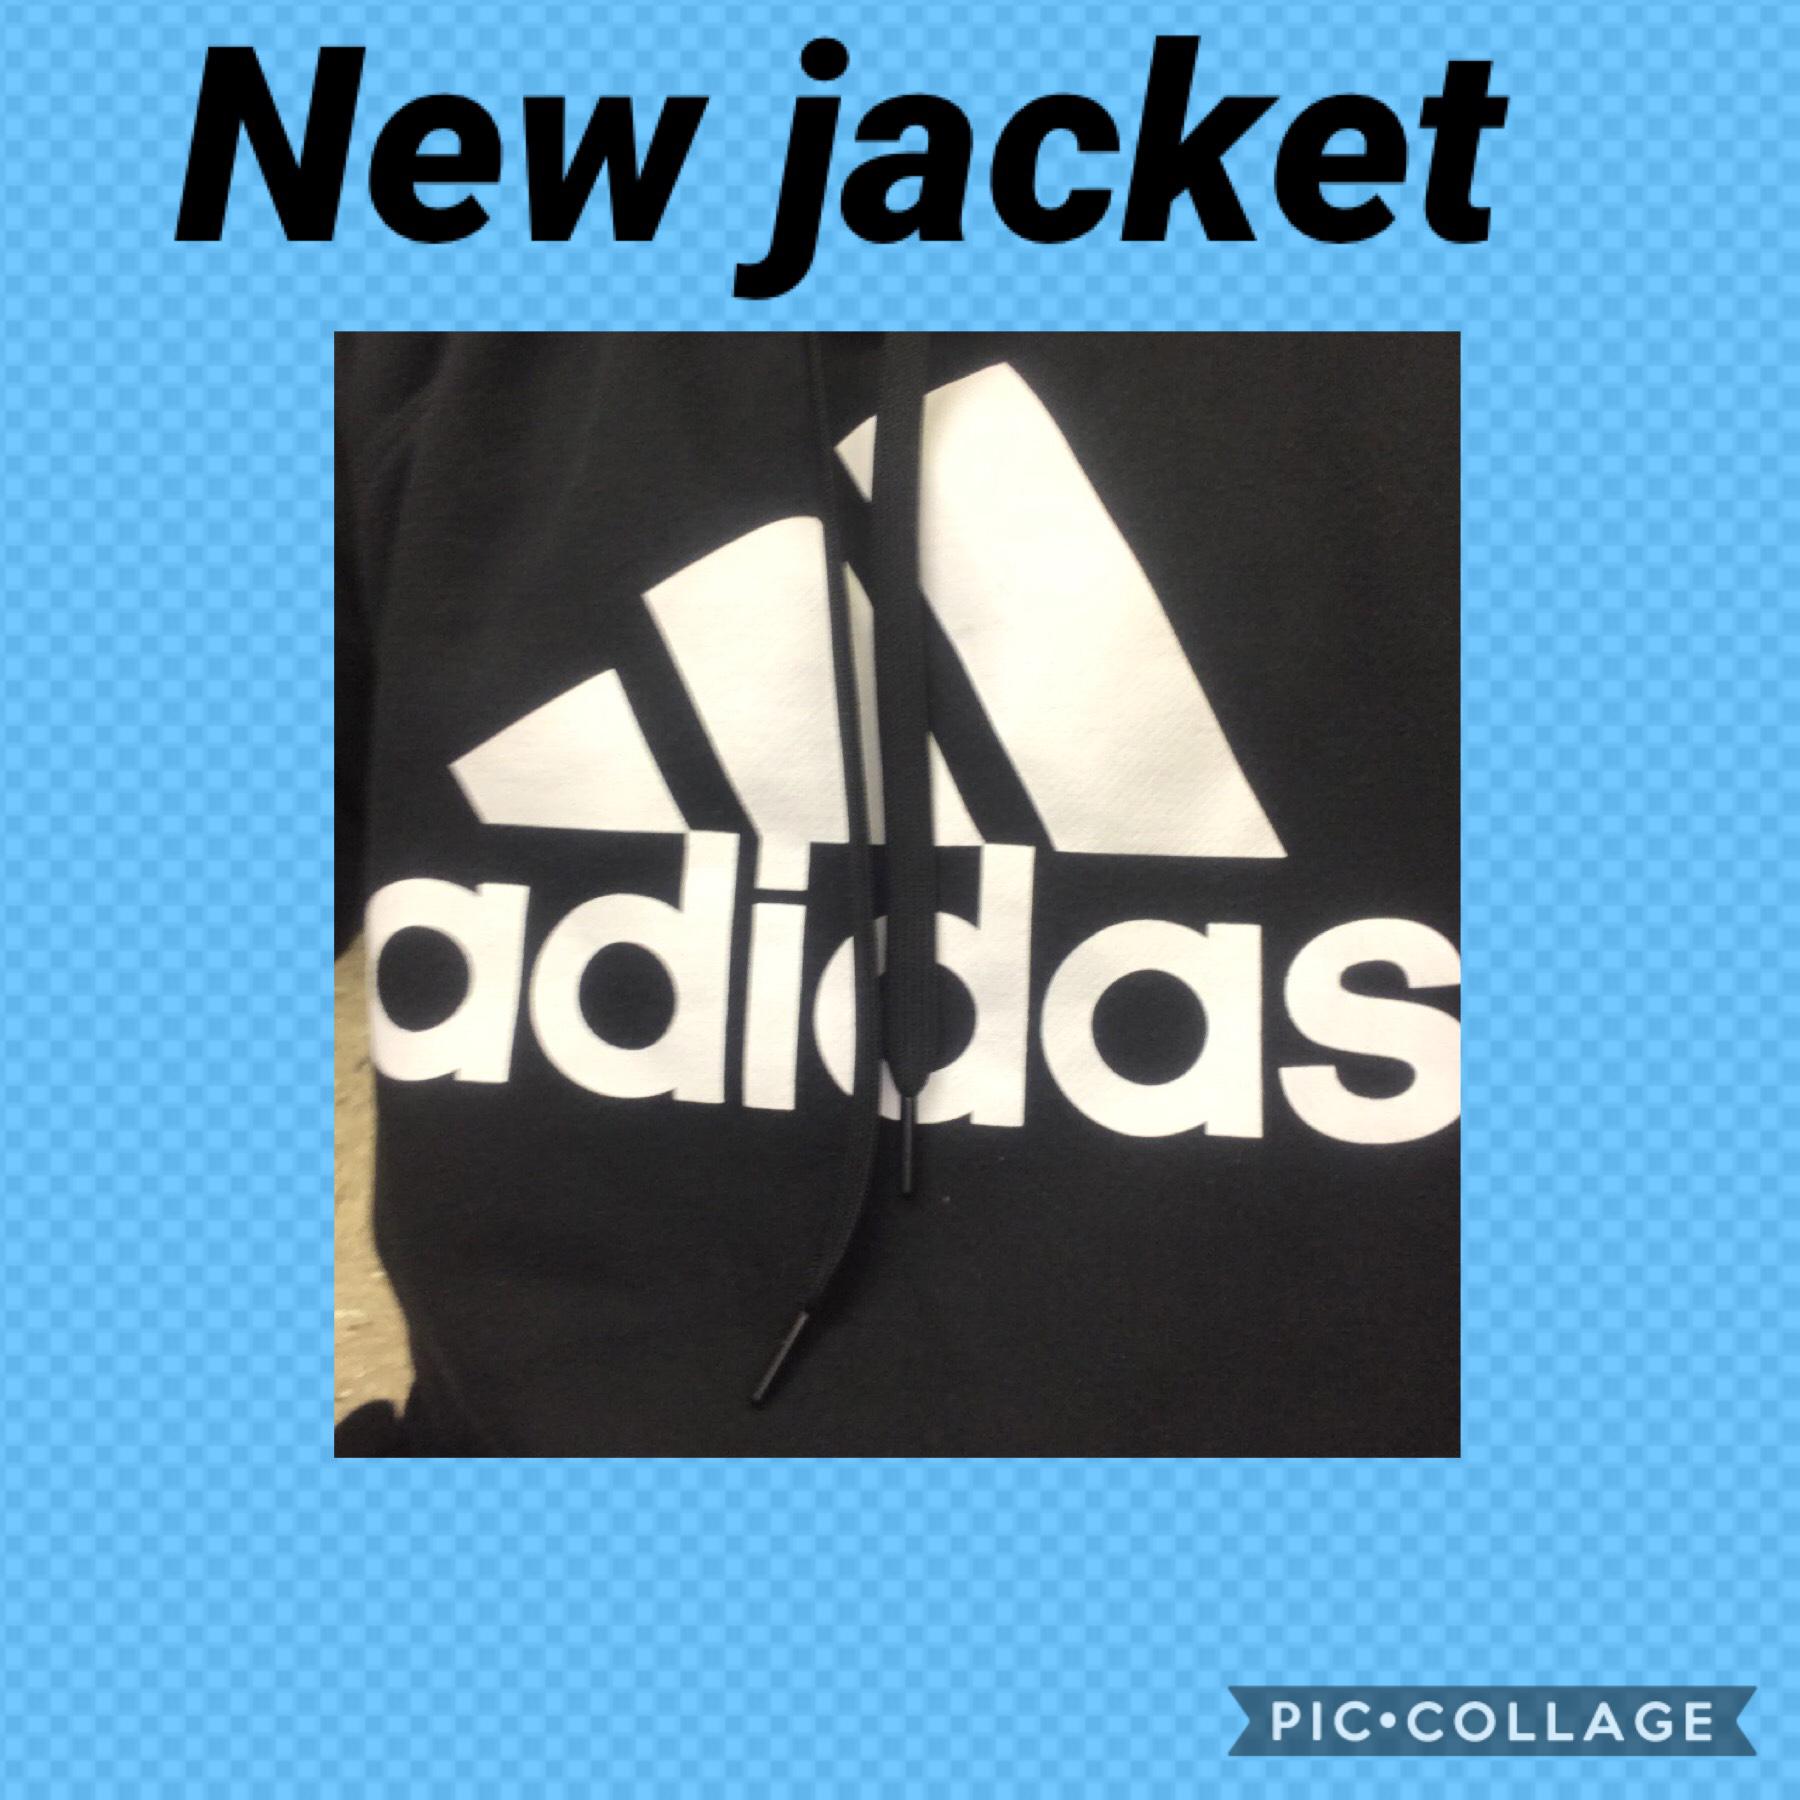 New jacket